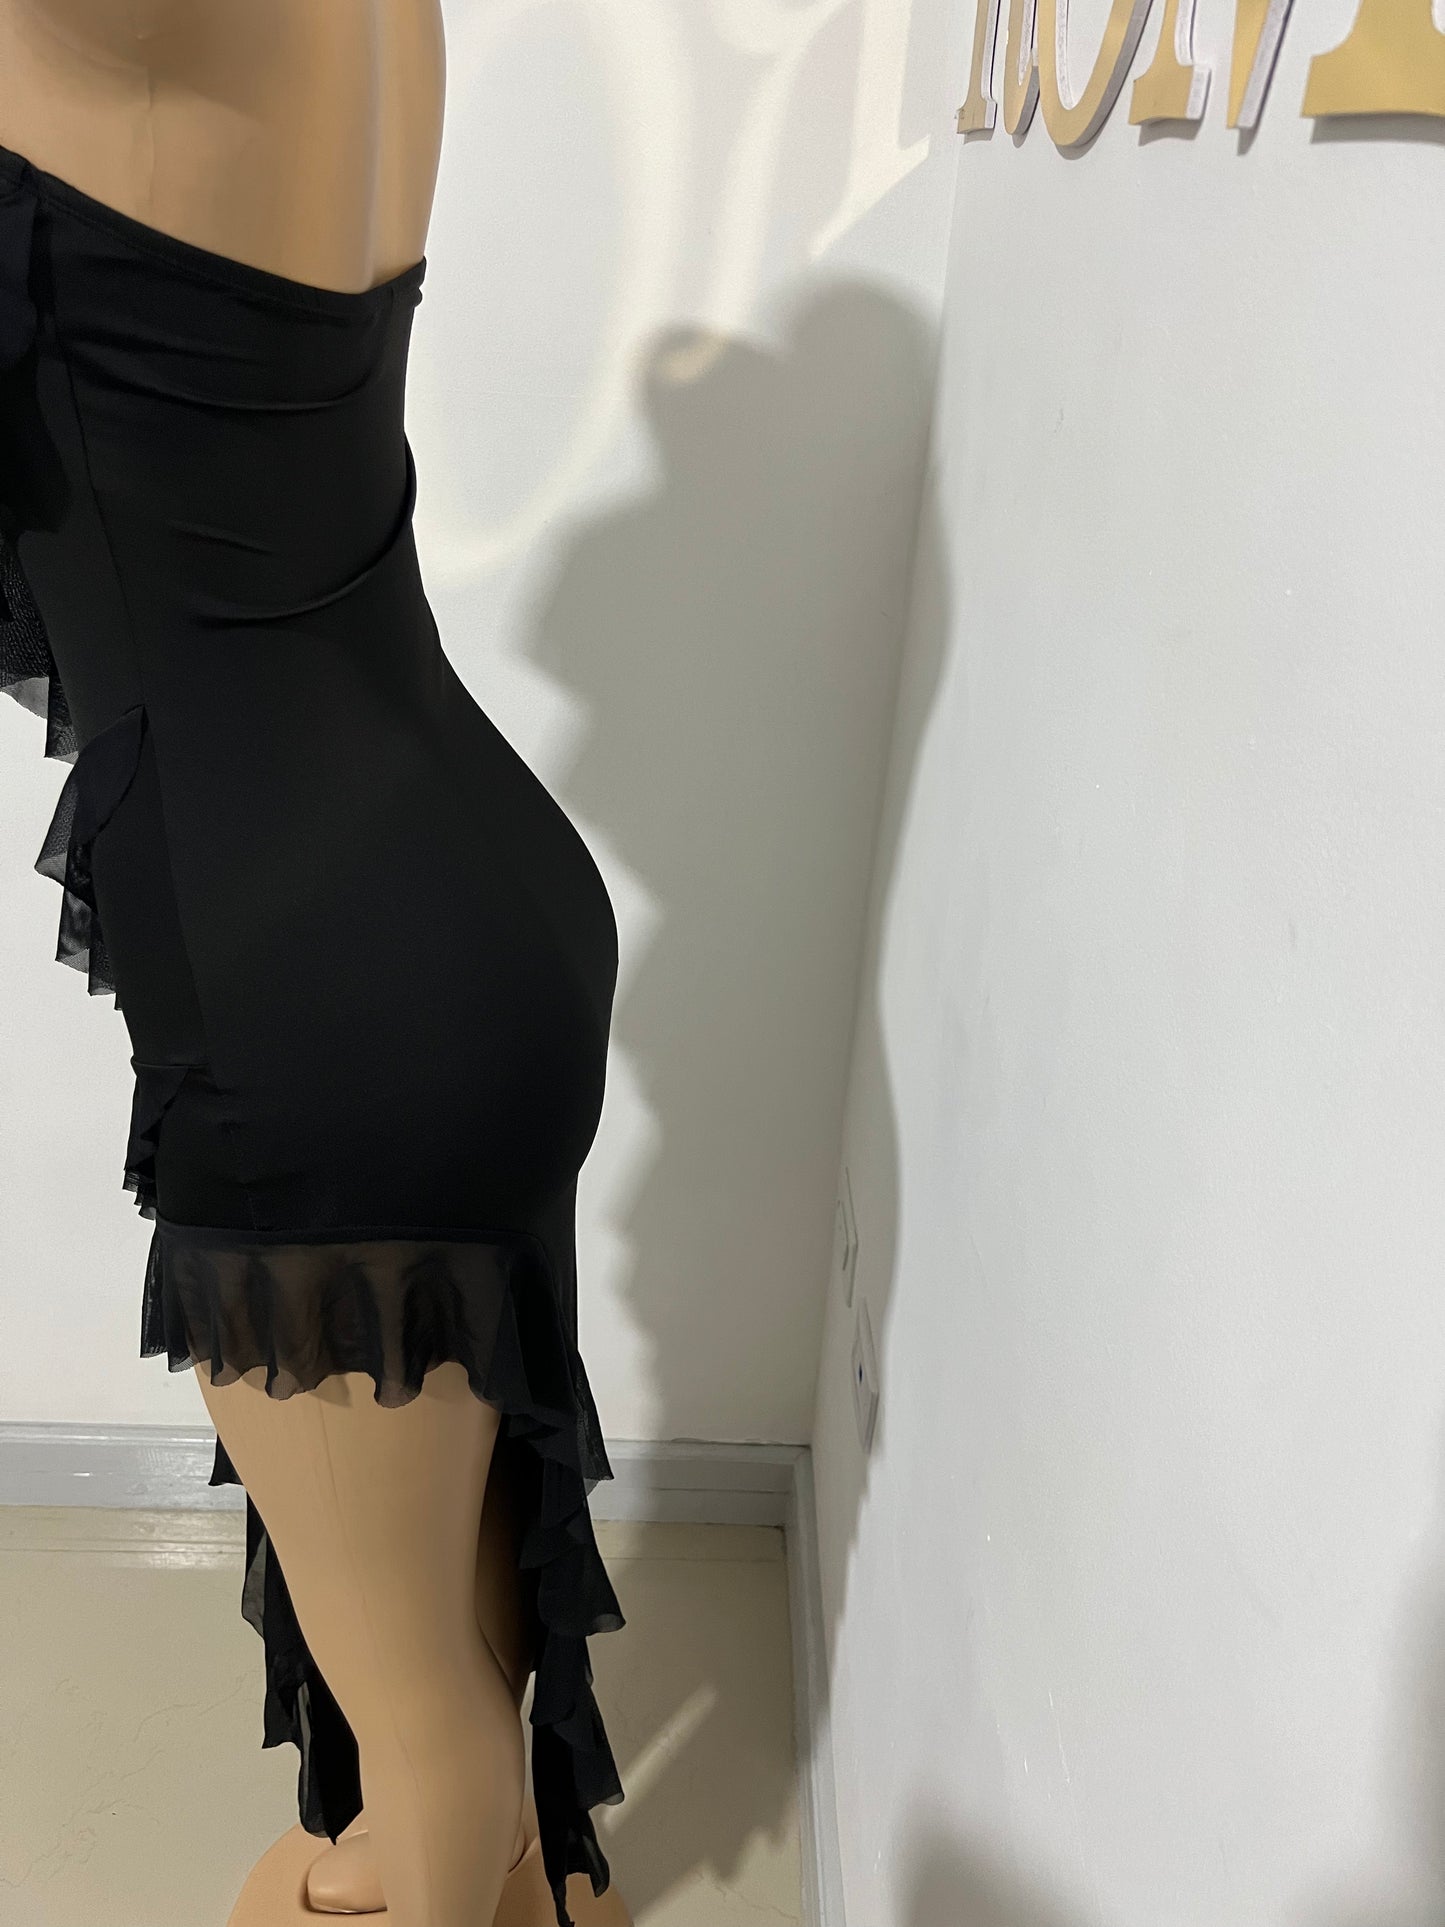 Chelsea Ruffle Dress (Black)